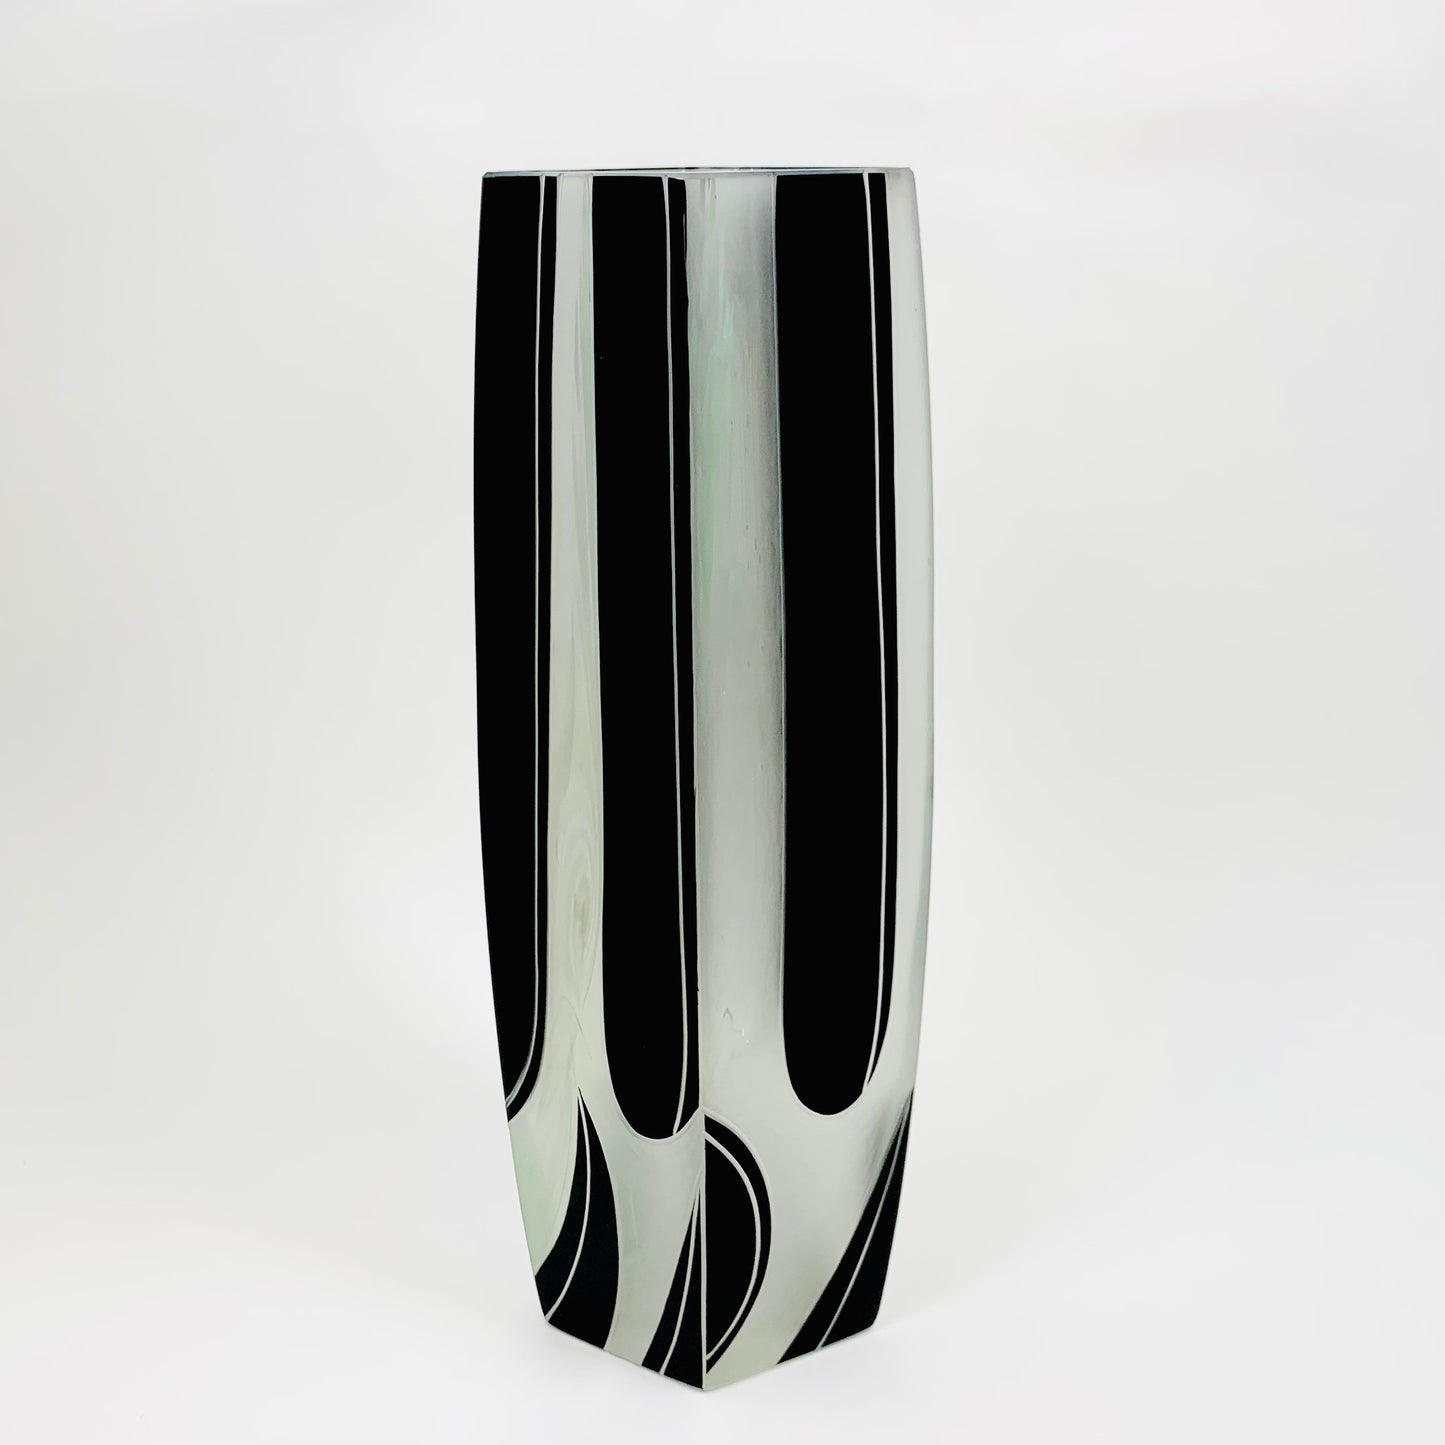 Antique Art Deco black enamel pale sage green satin glass vase by Karl Palda